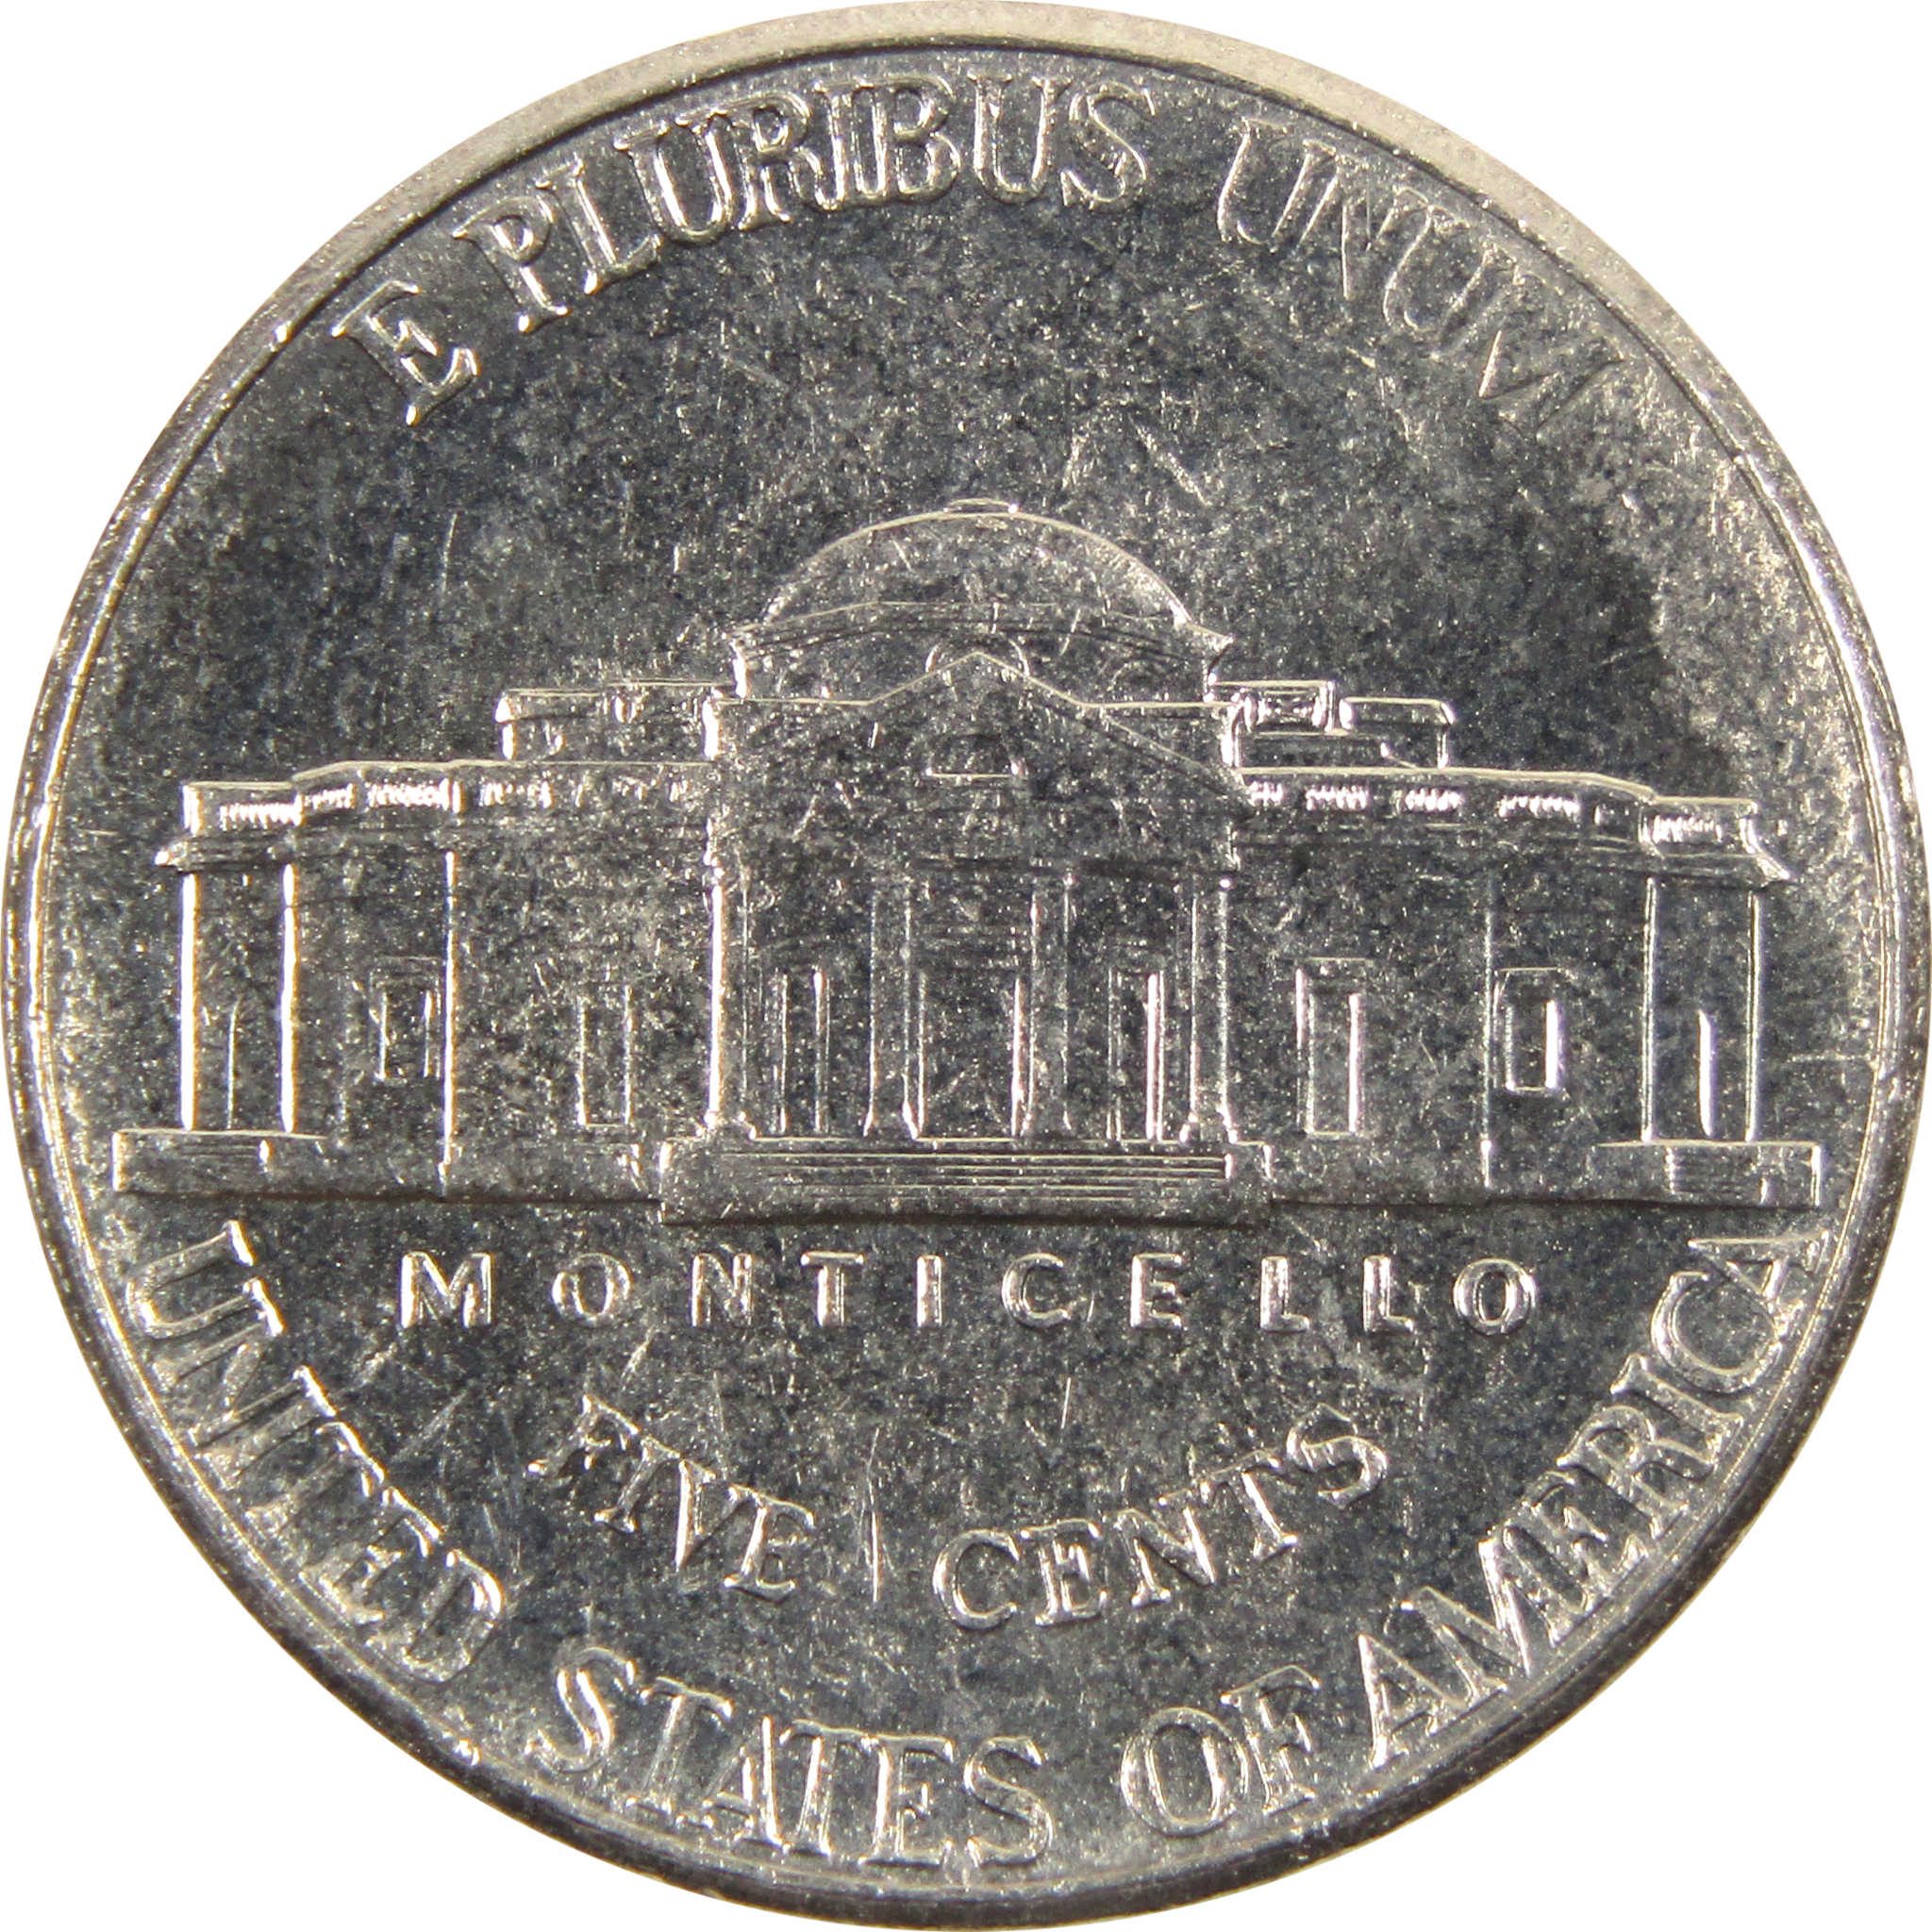 2000 D Jefferson Nickel BU Uncirculated 5c Coin